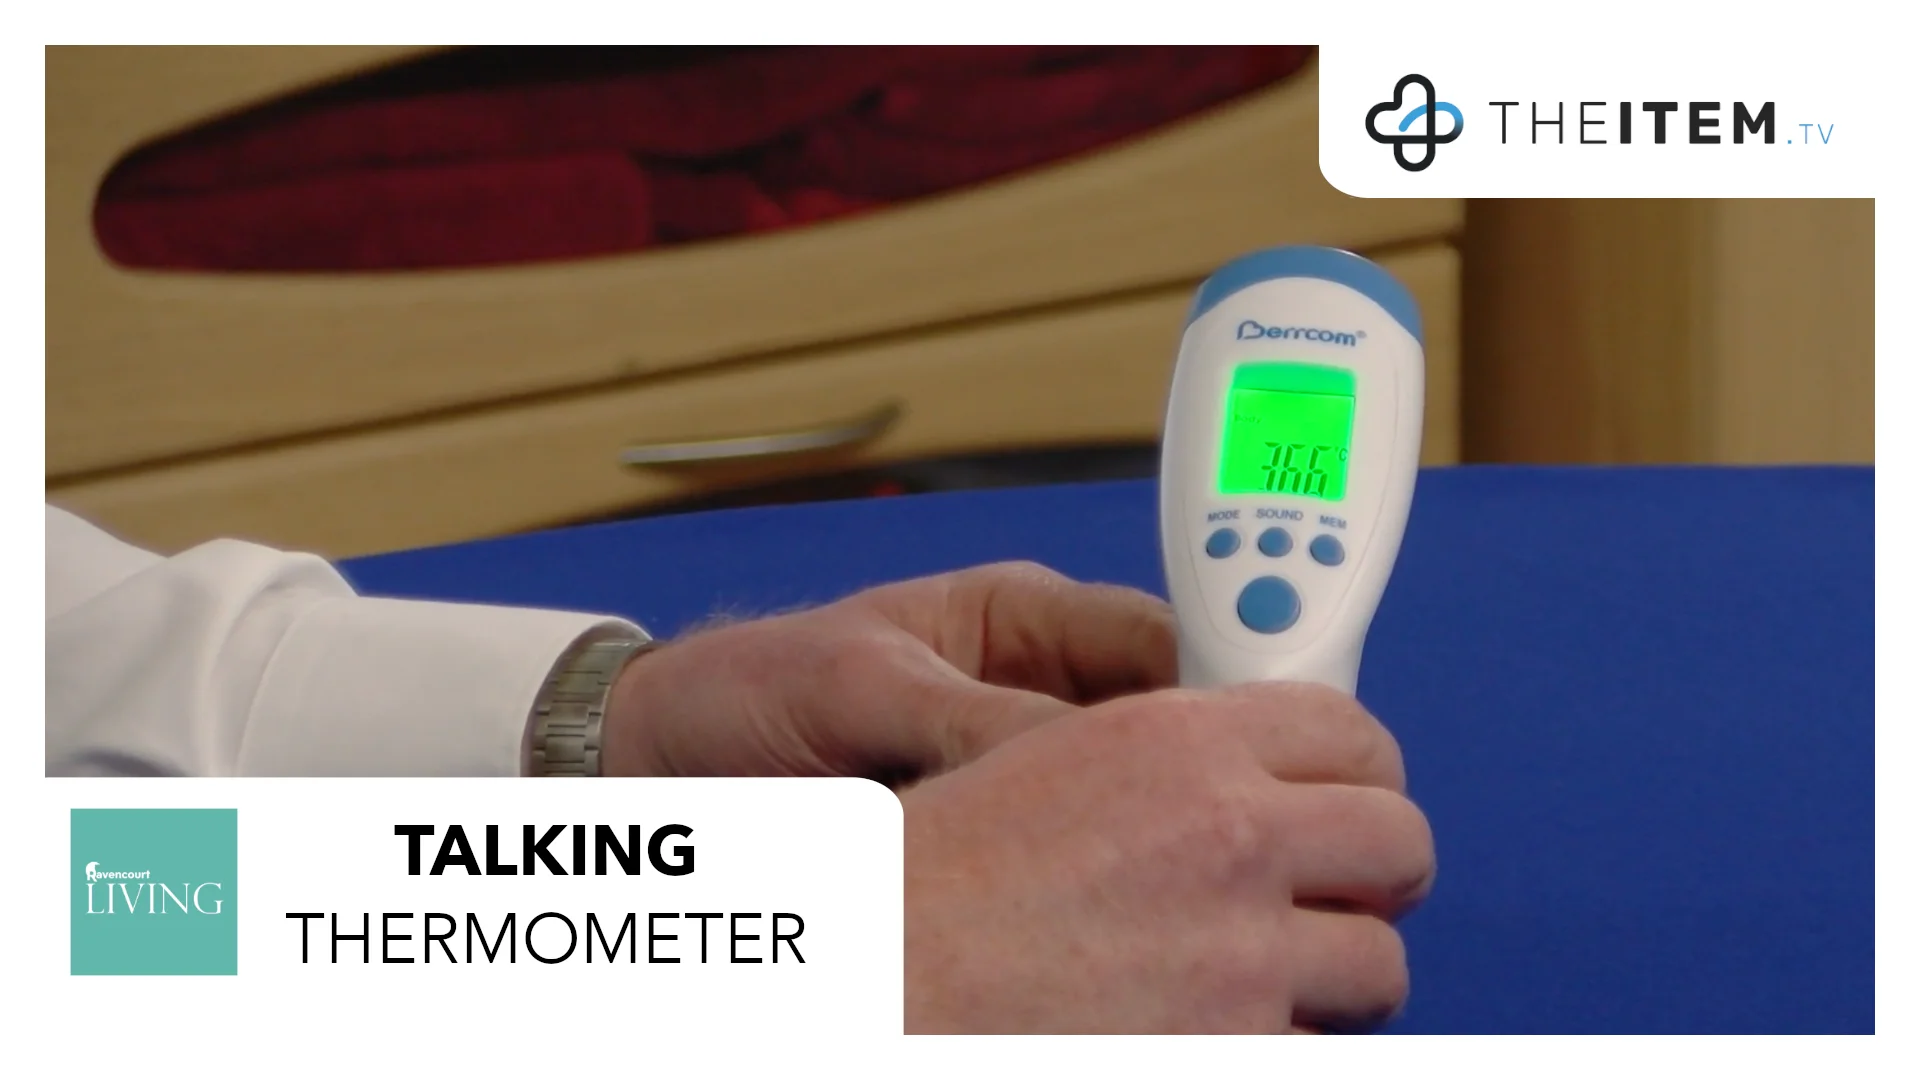 X101: Talking Thermometer on Vimeo